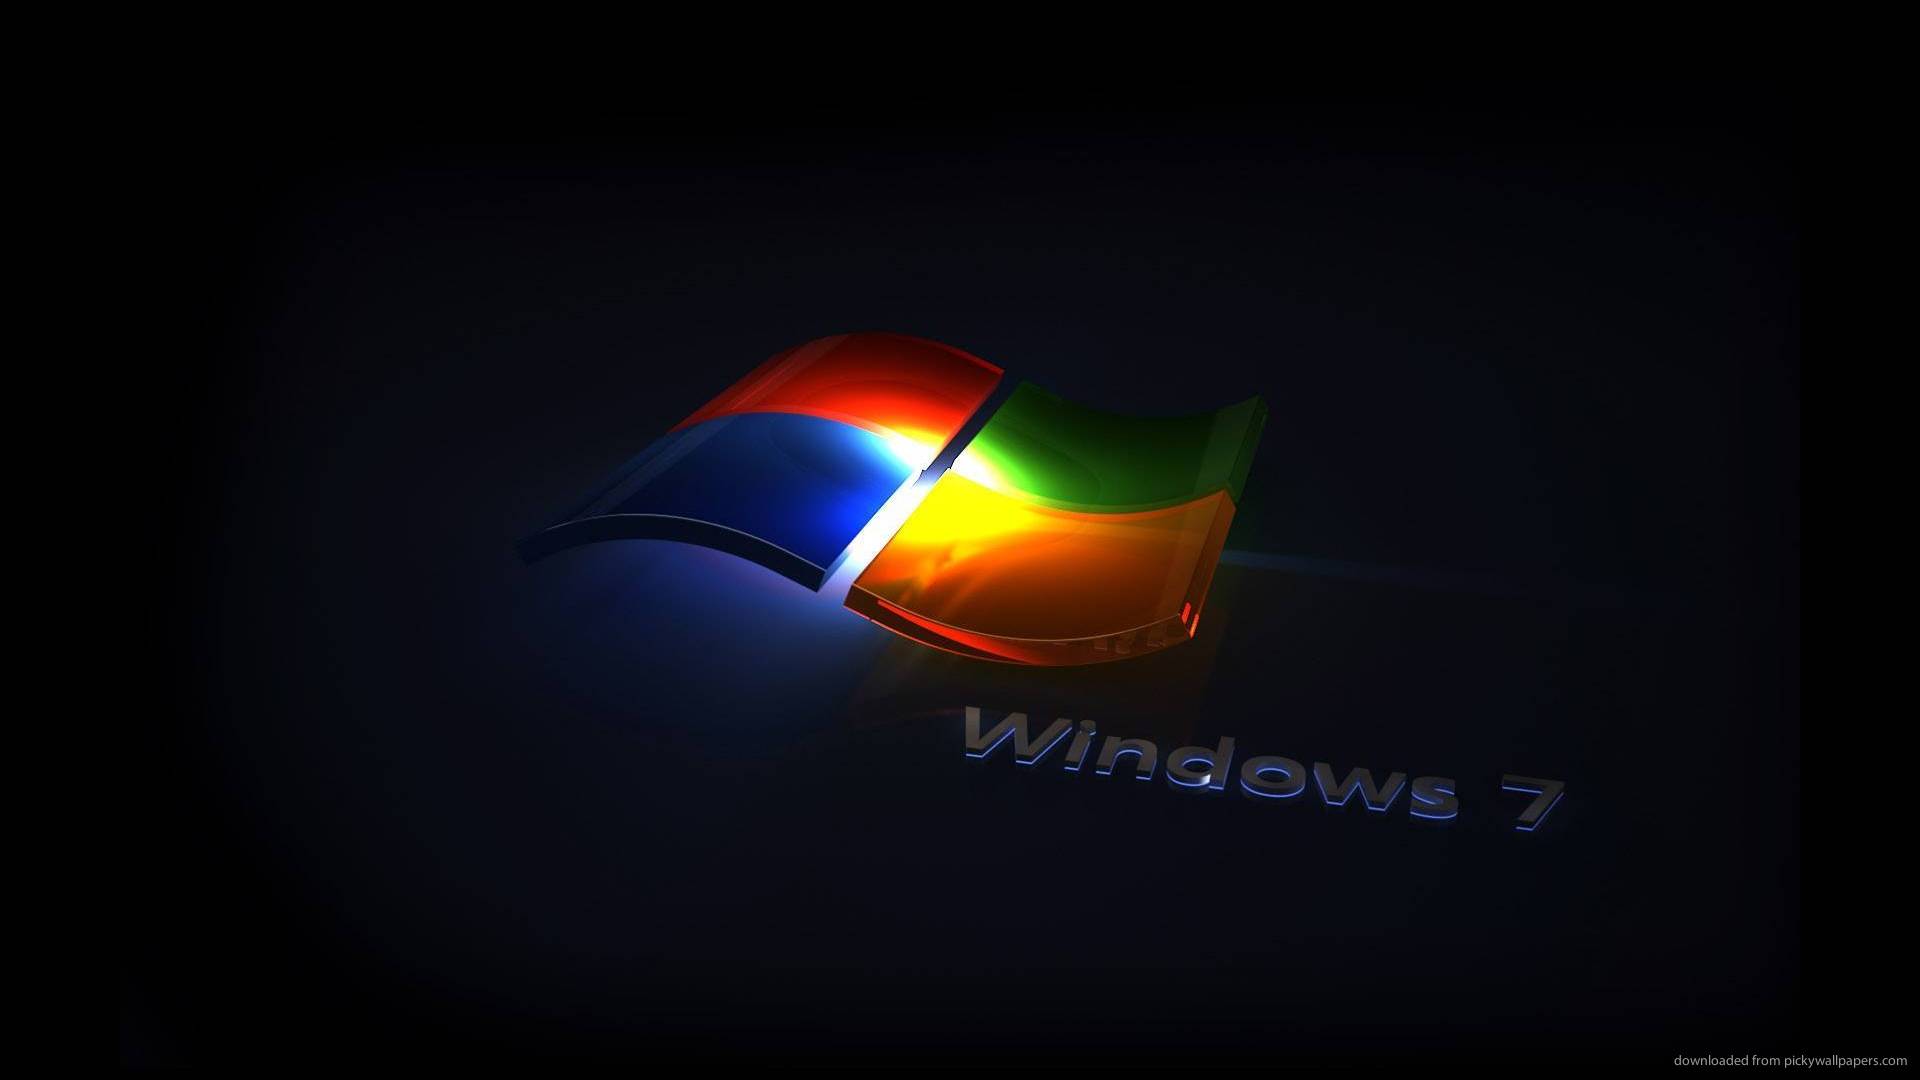 Windows 7 Wallpaper HD 1920X1080 wallpaper